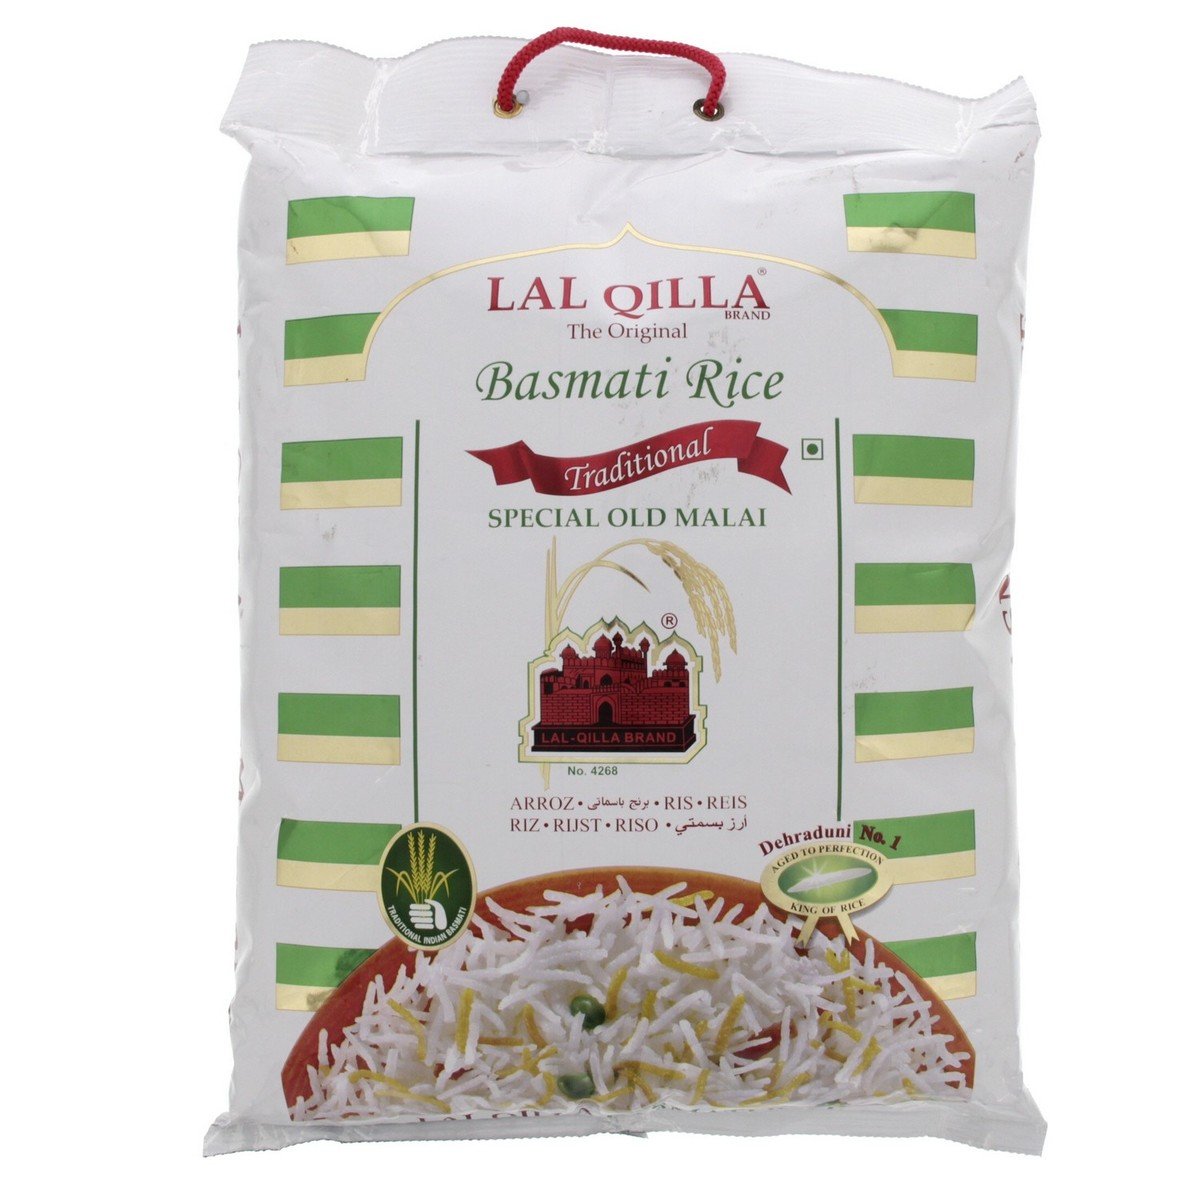 Lal Qilla Basmati Rice 5 kg